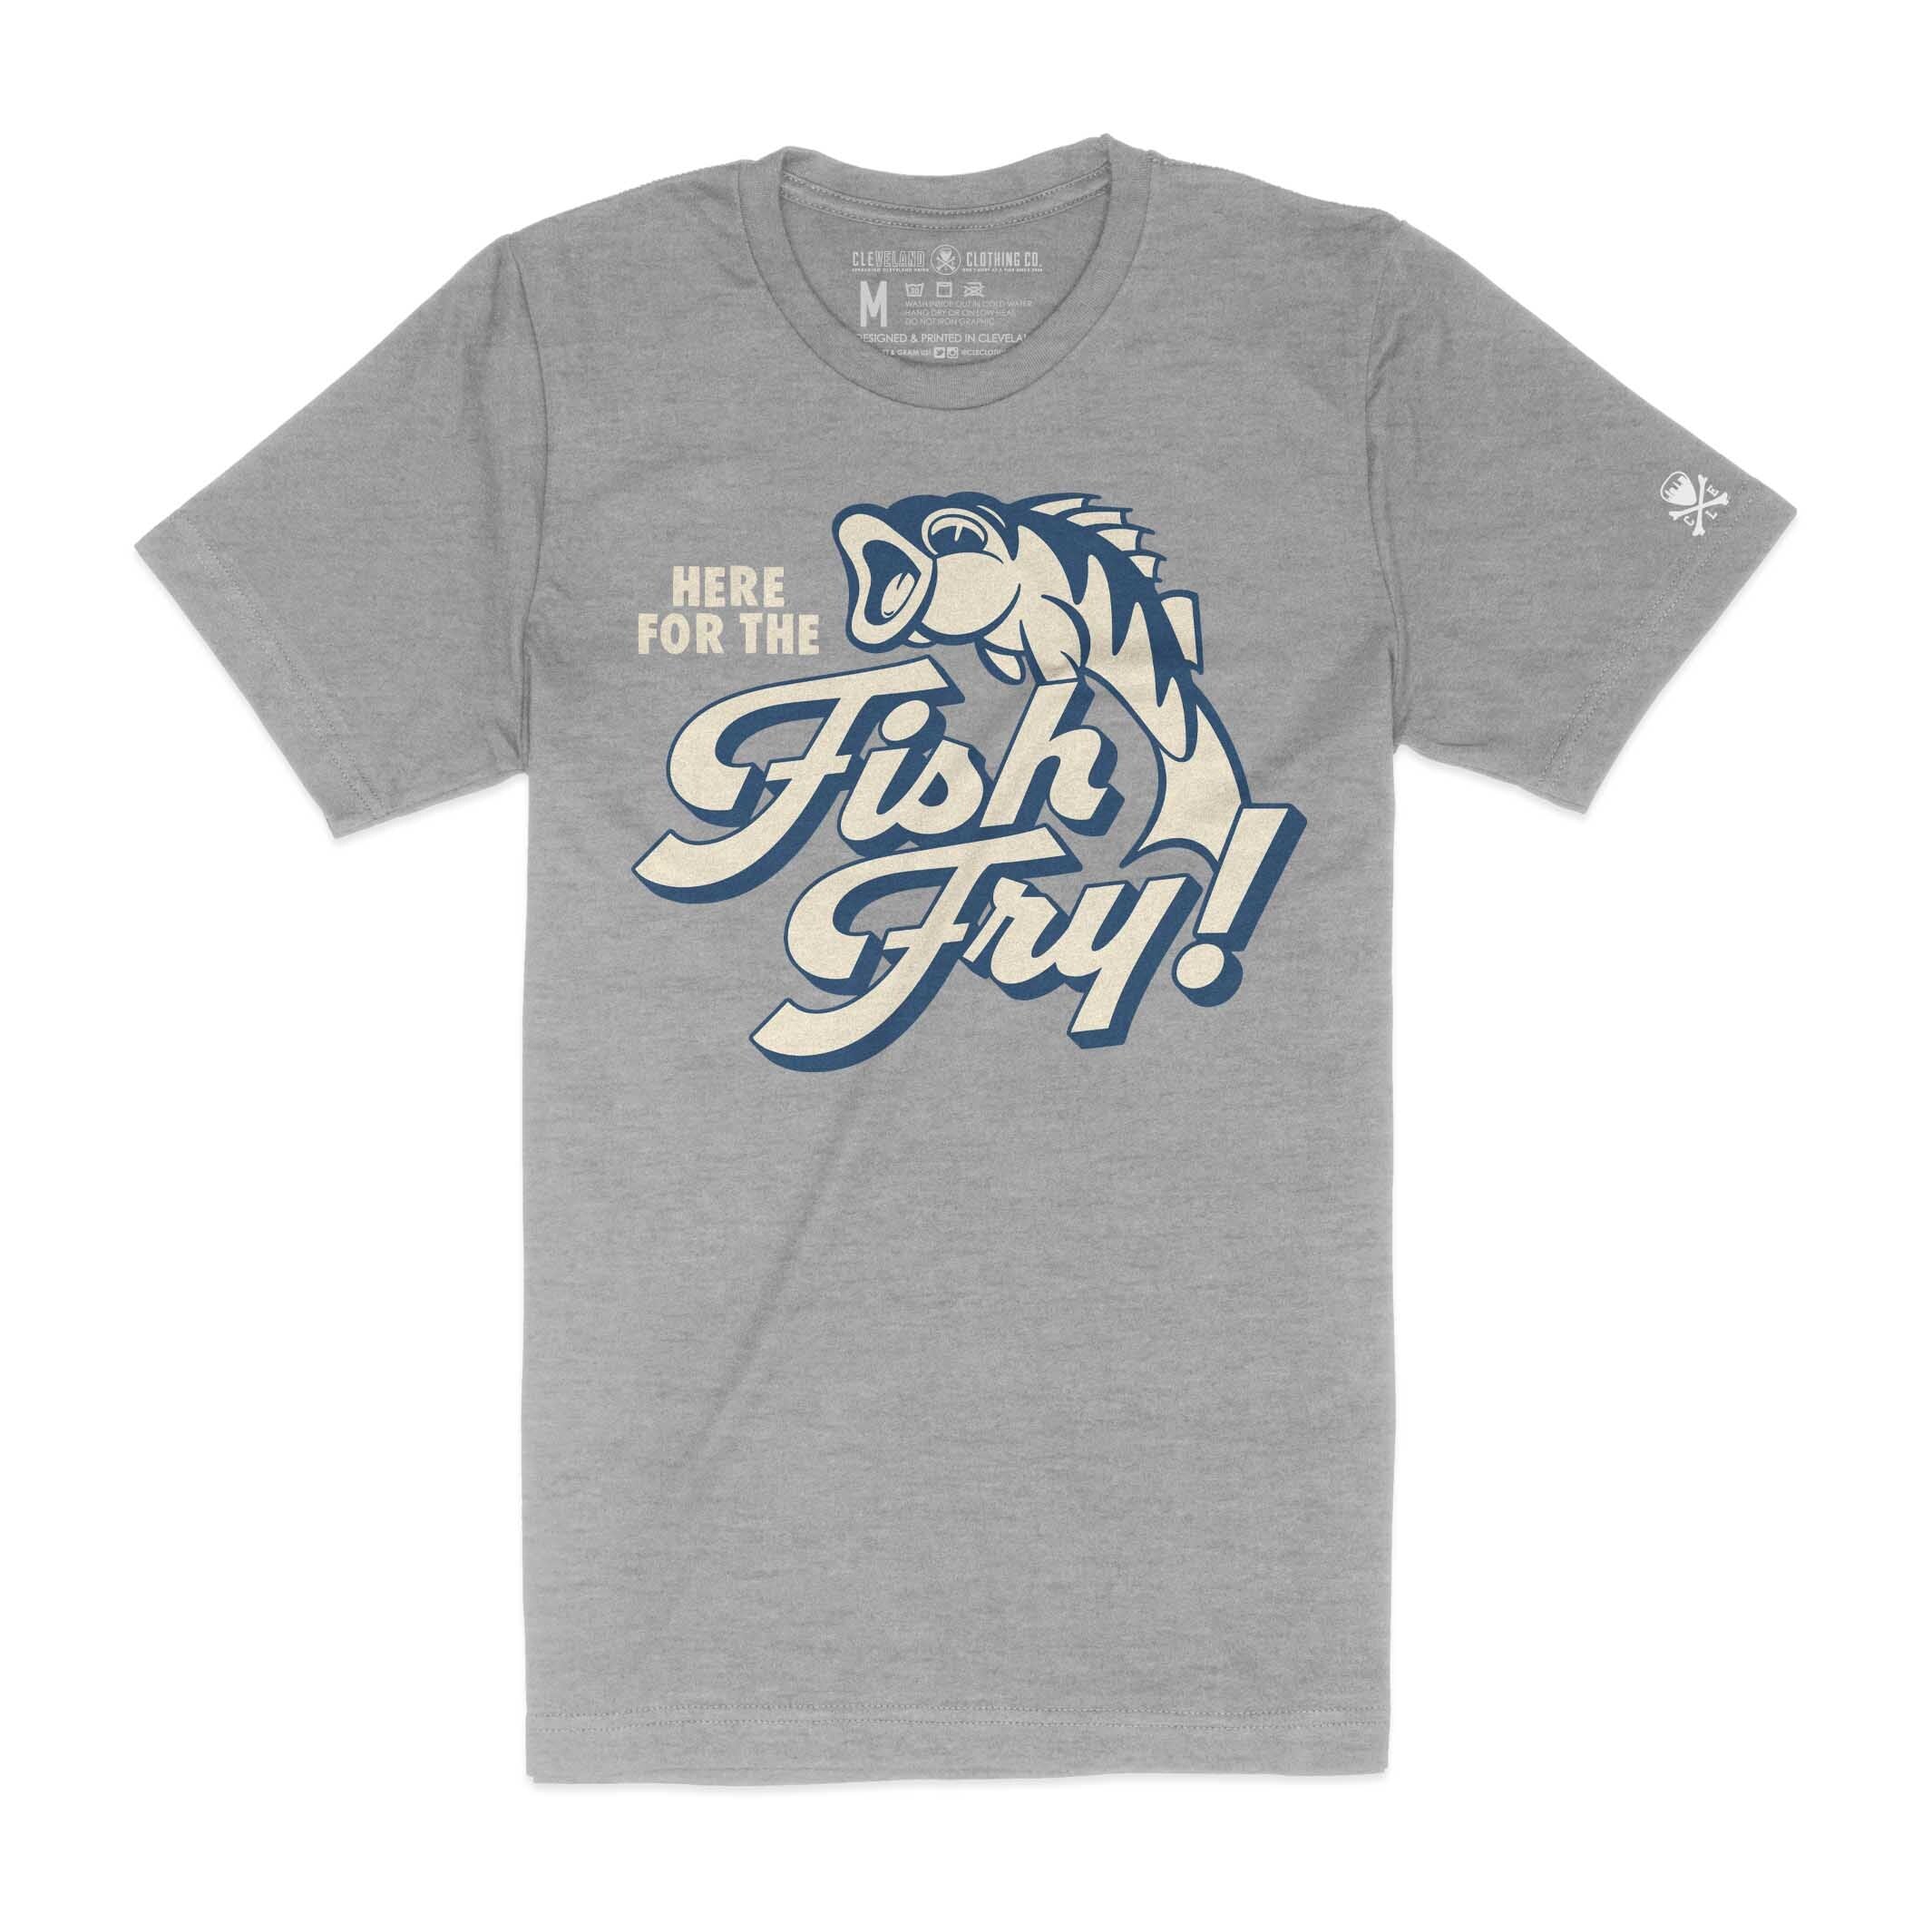 Fishing t shirt : I MAKE FISH COME – I'M A REAL MAN shirt-CL